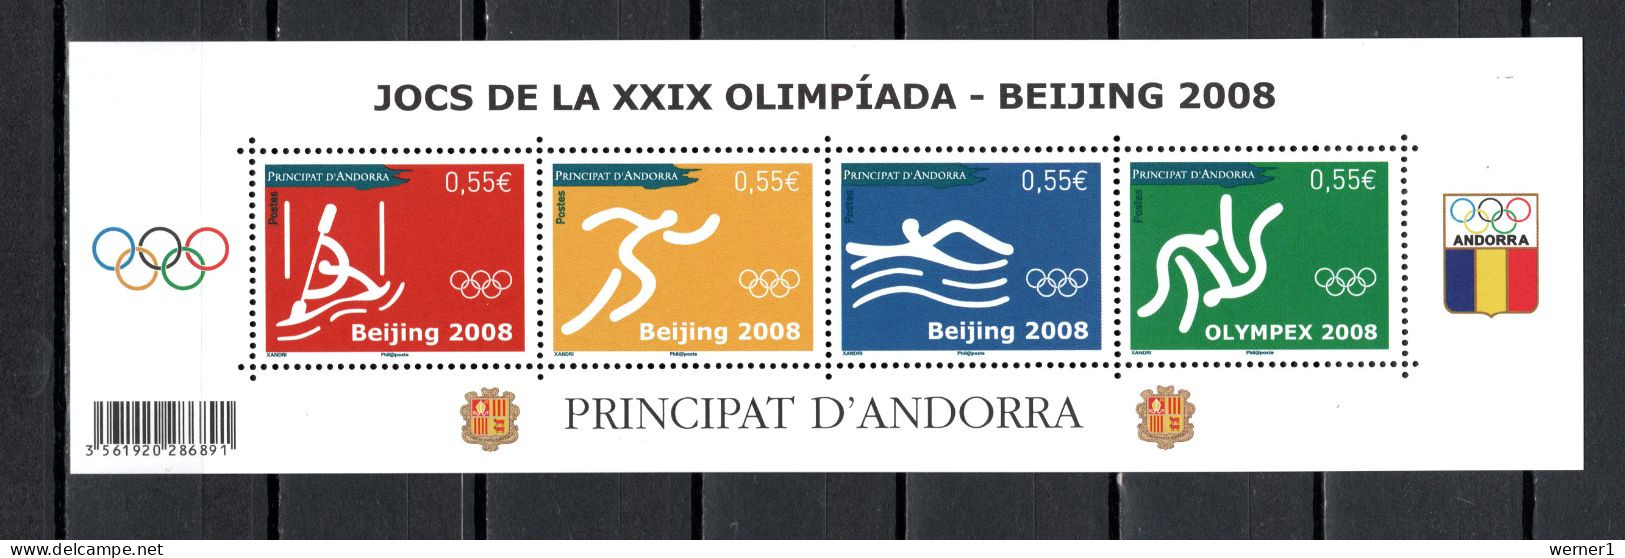 Andorra French 2008 Olympic Games Beijing, Swimming, Judo Etc. S/s MNH - Verano 2008: Pékin